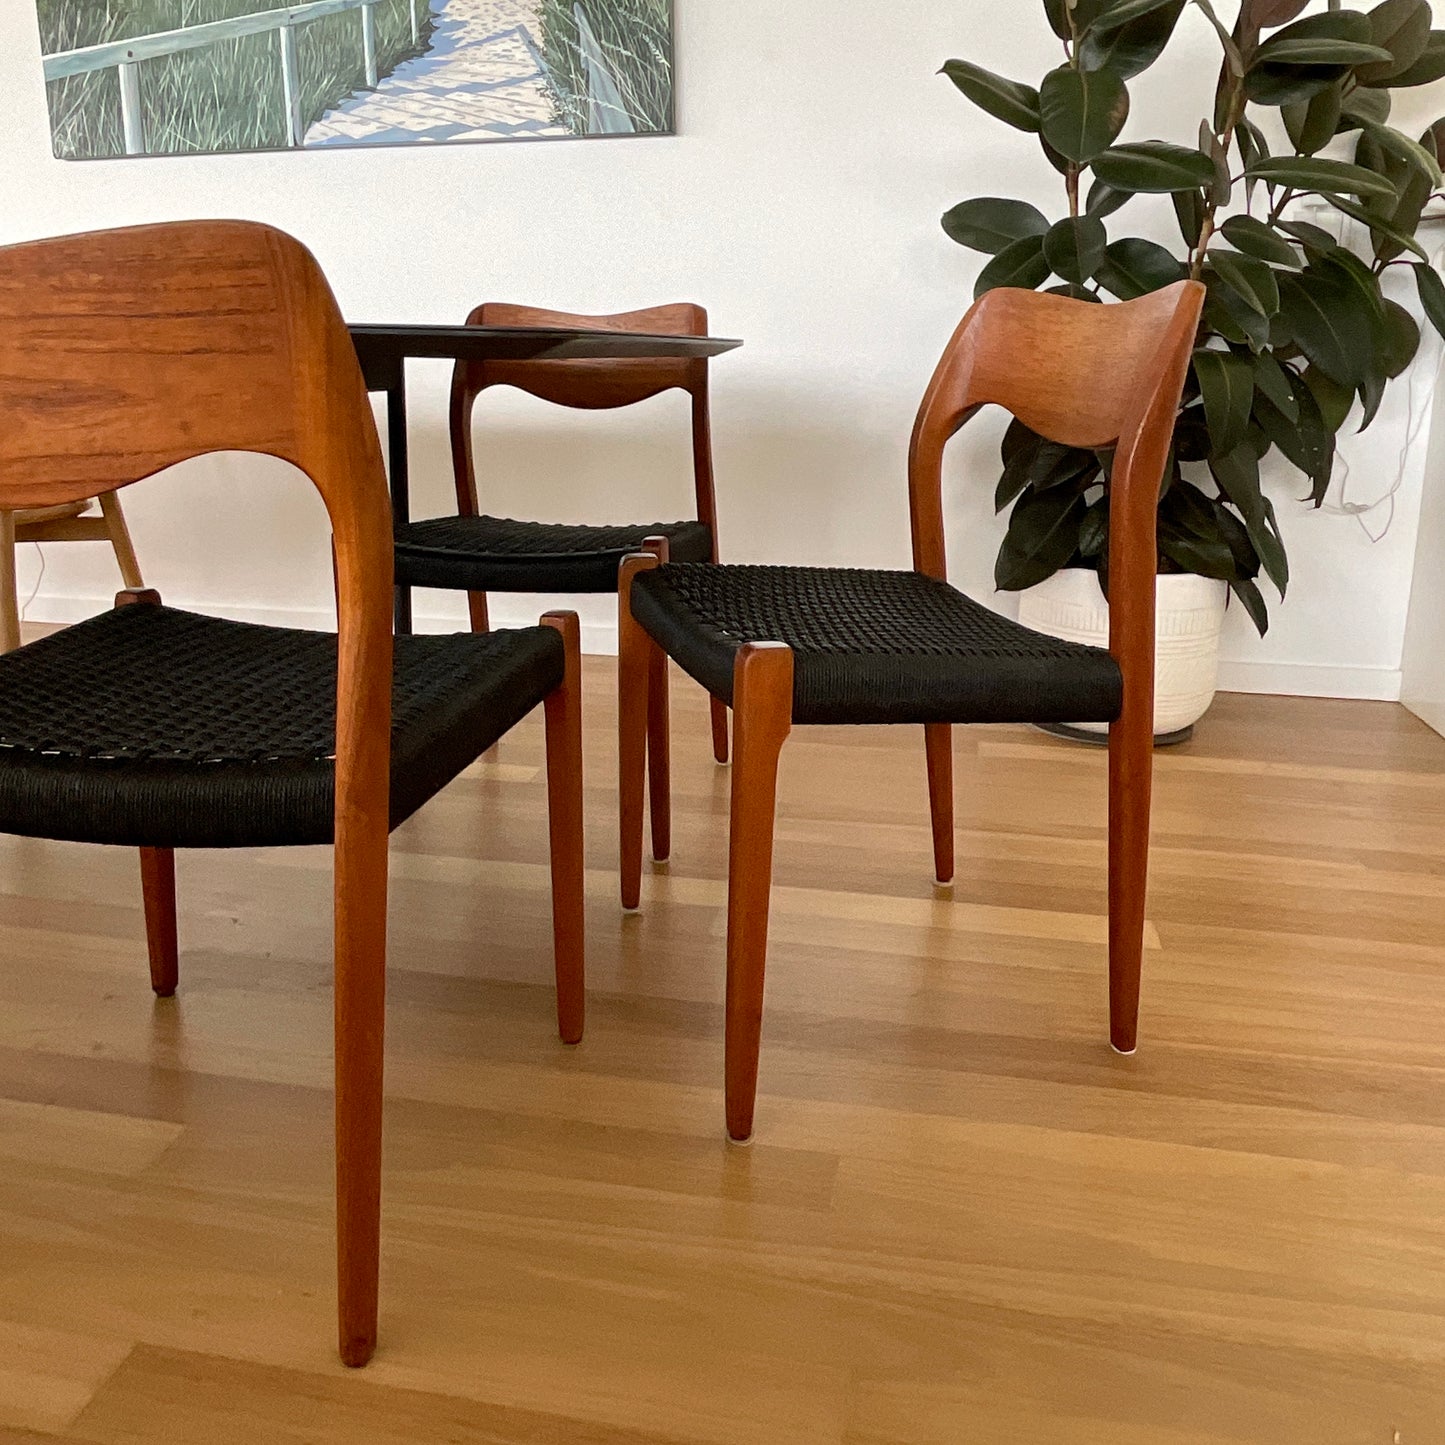 Set of FOUR Model #71 Chairs in Teak by Niels Møller for J.L Møller (2 sets available)